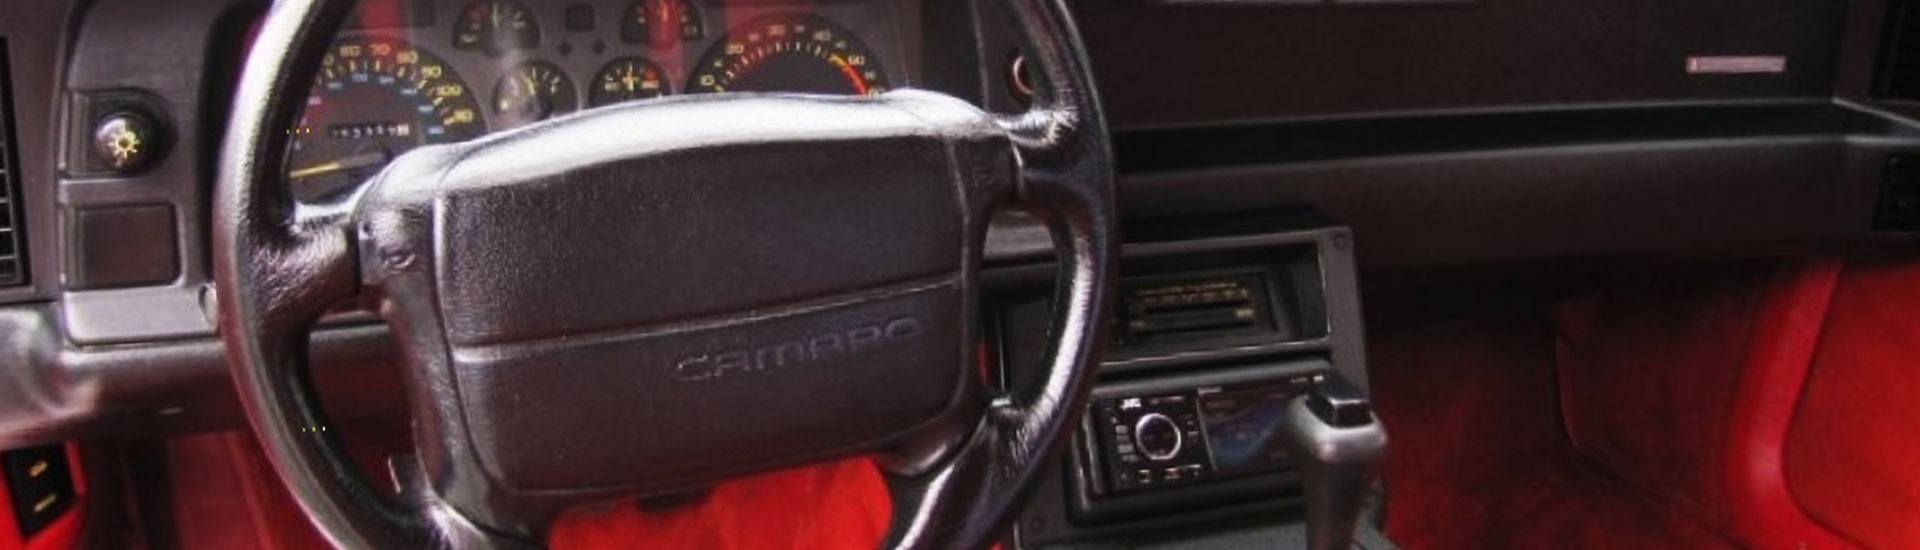 1991 Chevrolet Camaro Dash Kits